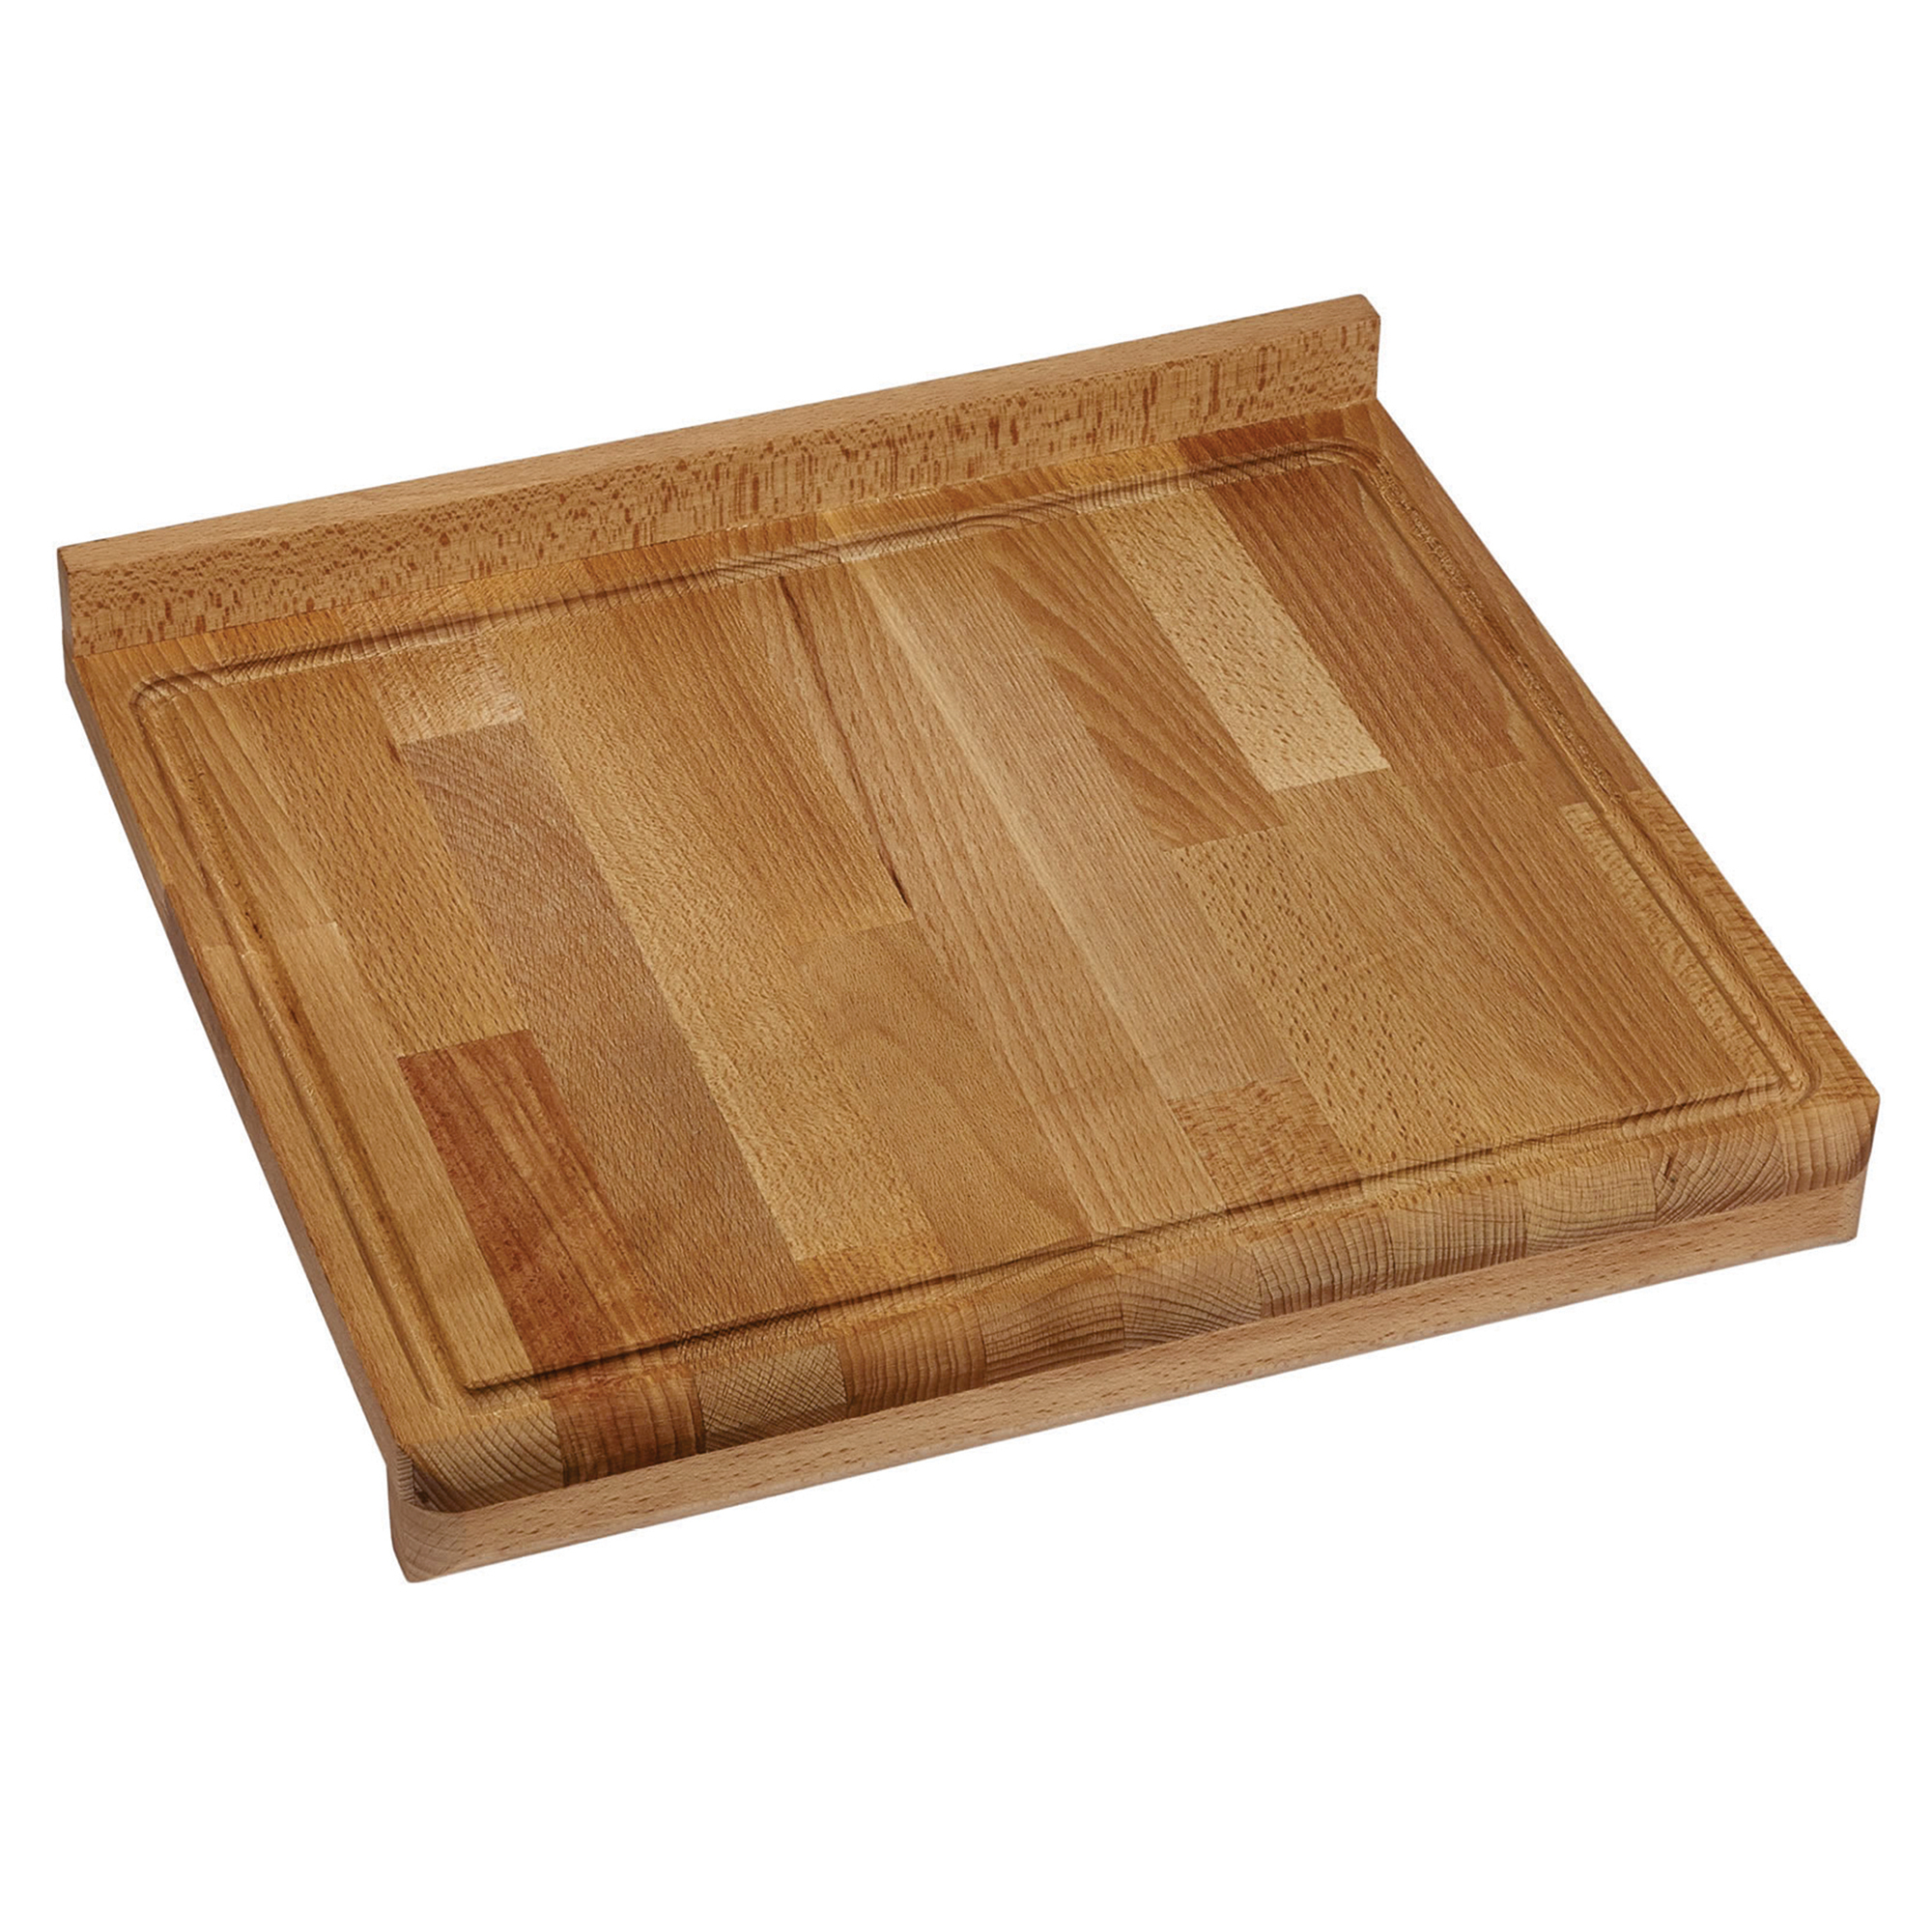 8.26 x 4.33 x 0.5-Inches Bisetti 63006 Olive Wood Cutting Board Brown